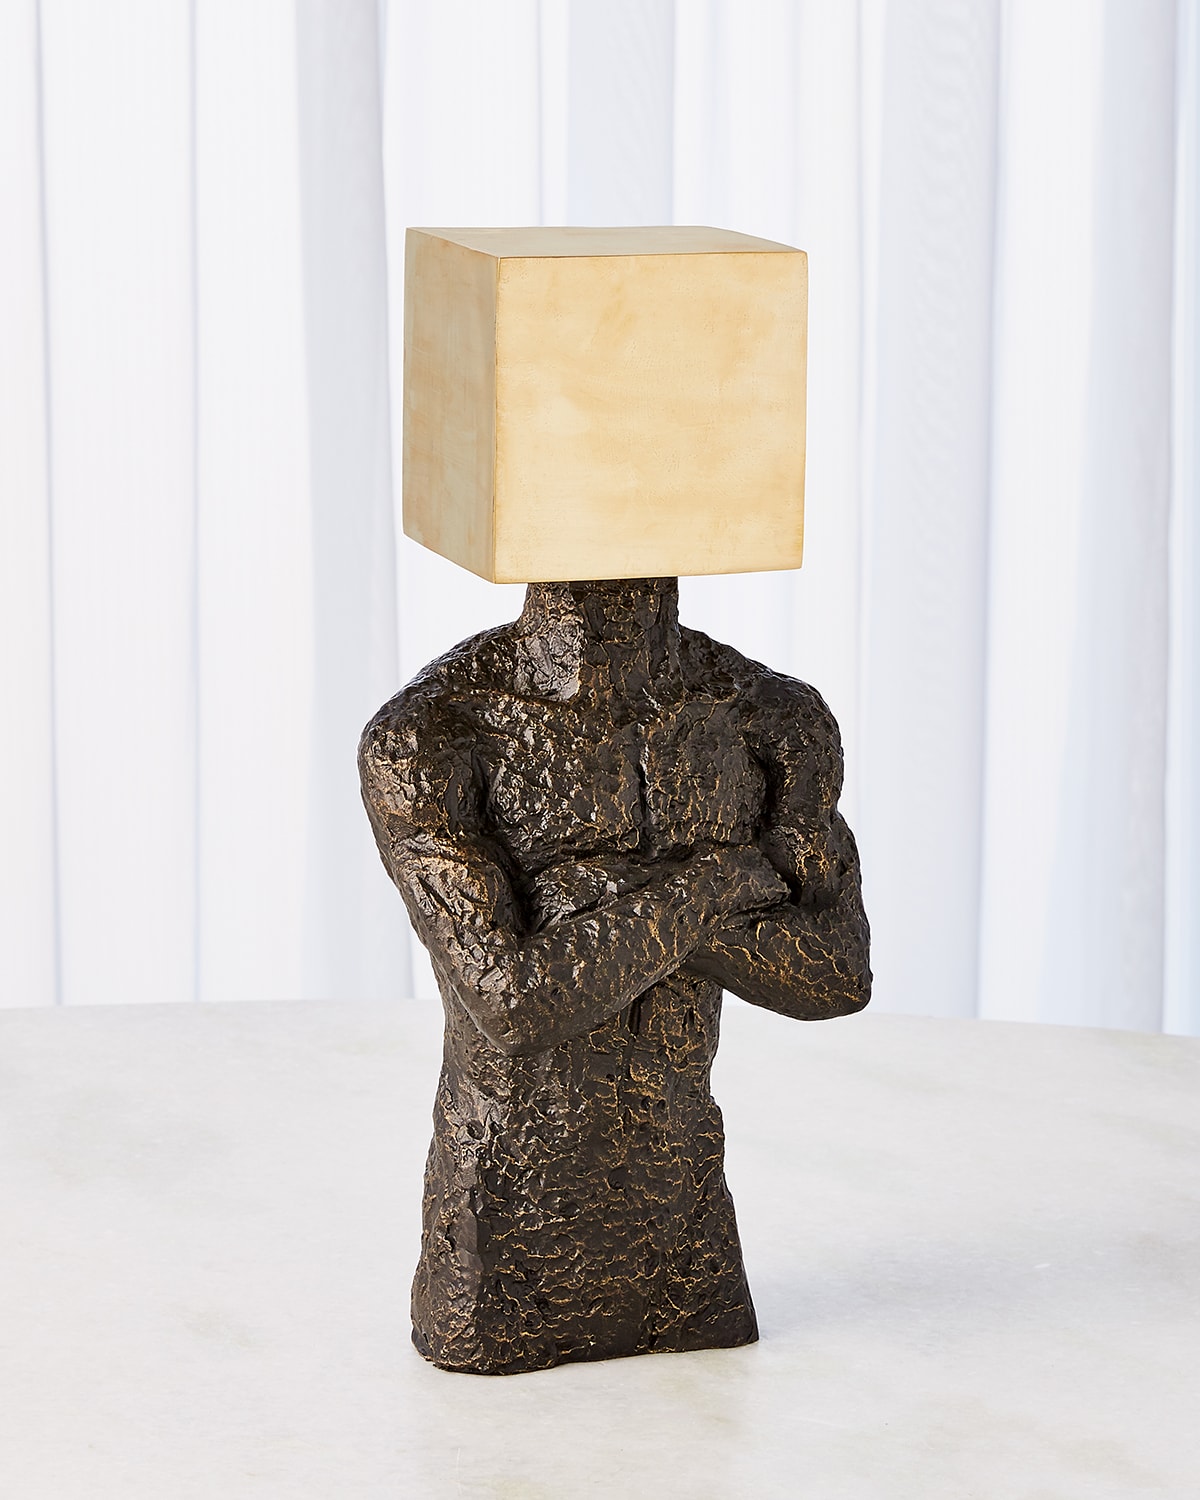 Cube Metric Head Sculpture